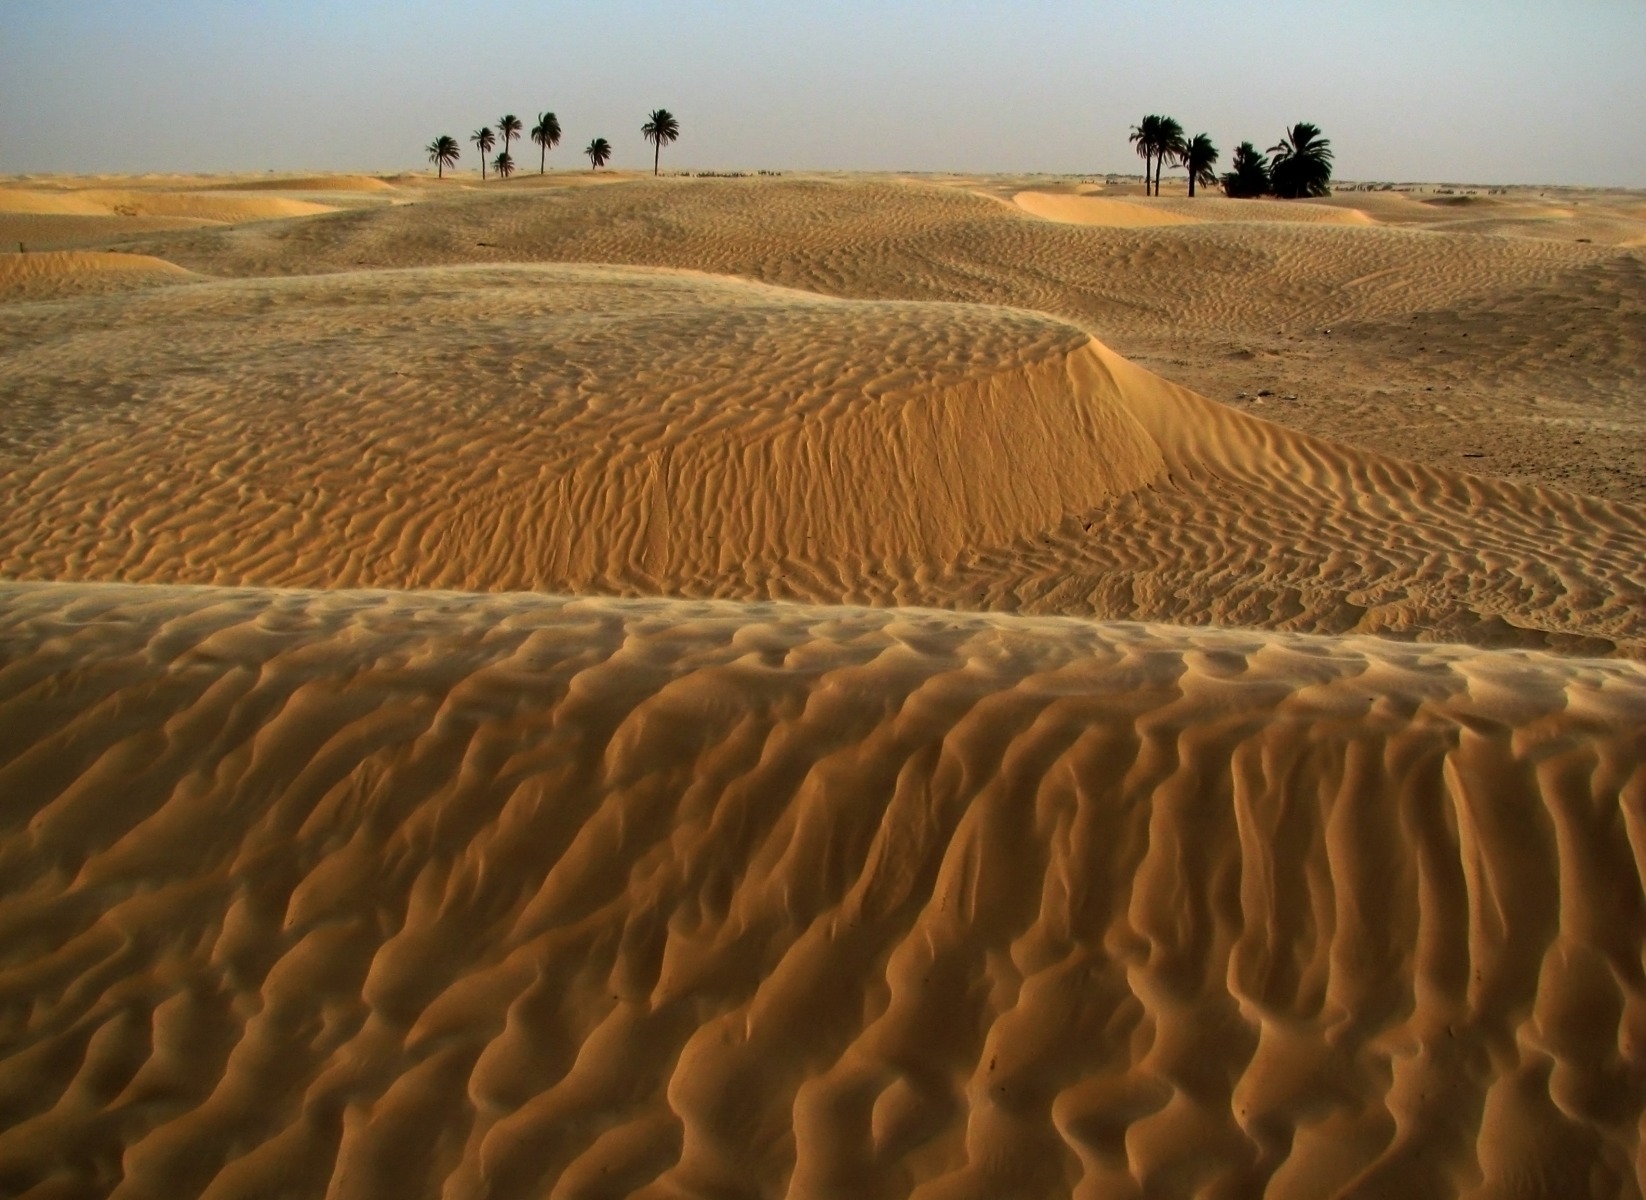 Сахара | Фотограф Владимир Науменко | foto.by фото.бай